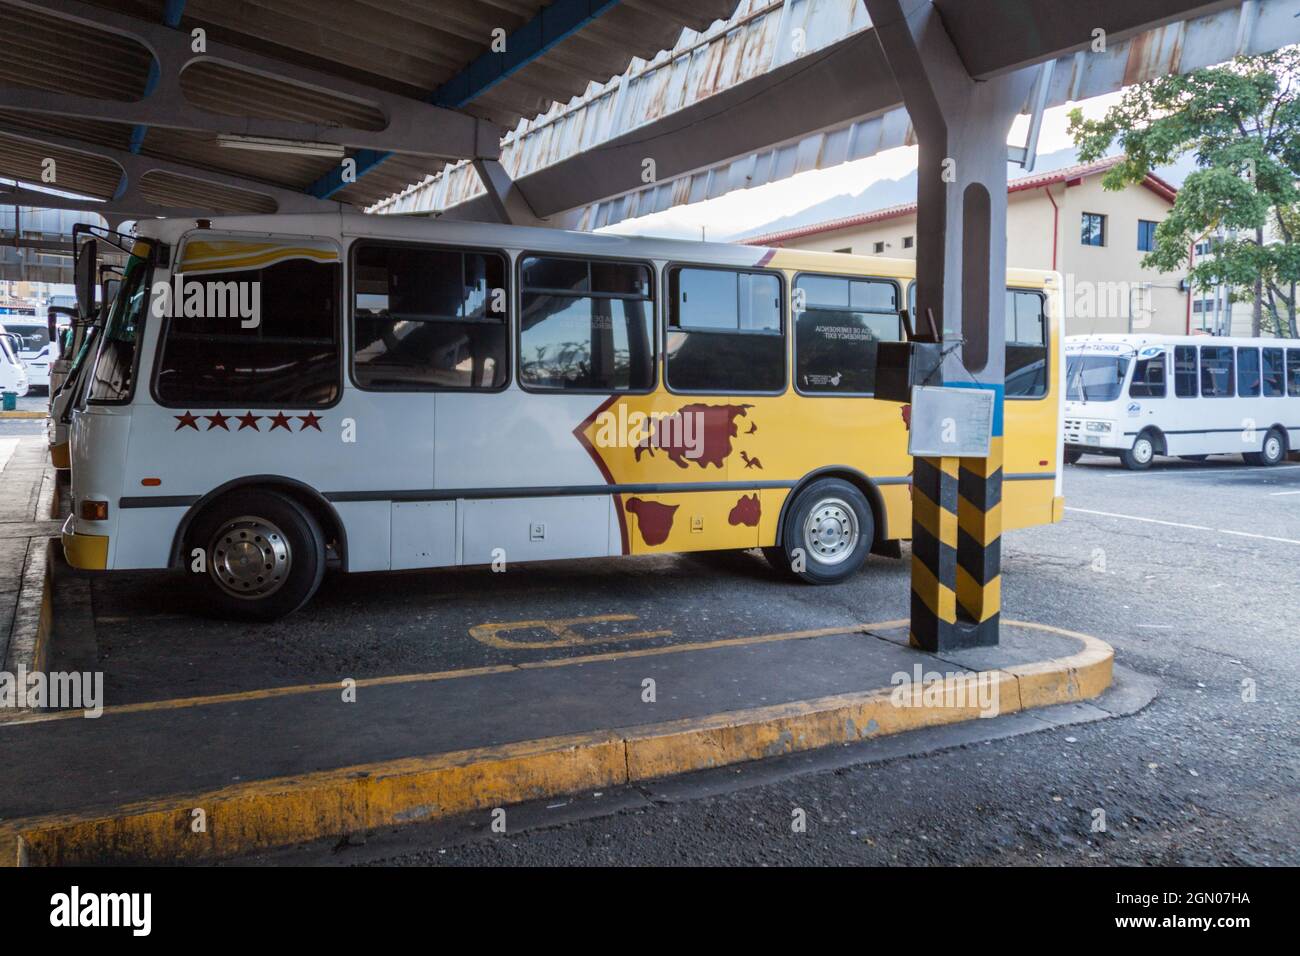 MERIDA, VENEZUELA - AUGUST 20, 2015: Small buses are waiting at a Bus station in Merida, Venezuela Stock Photo